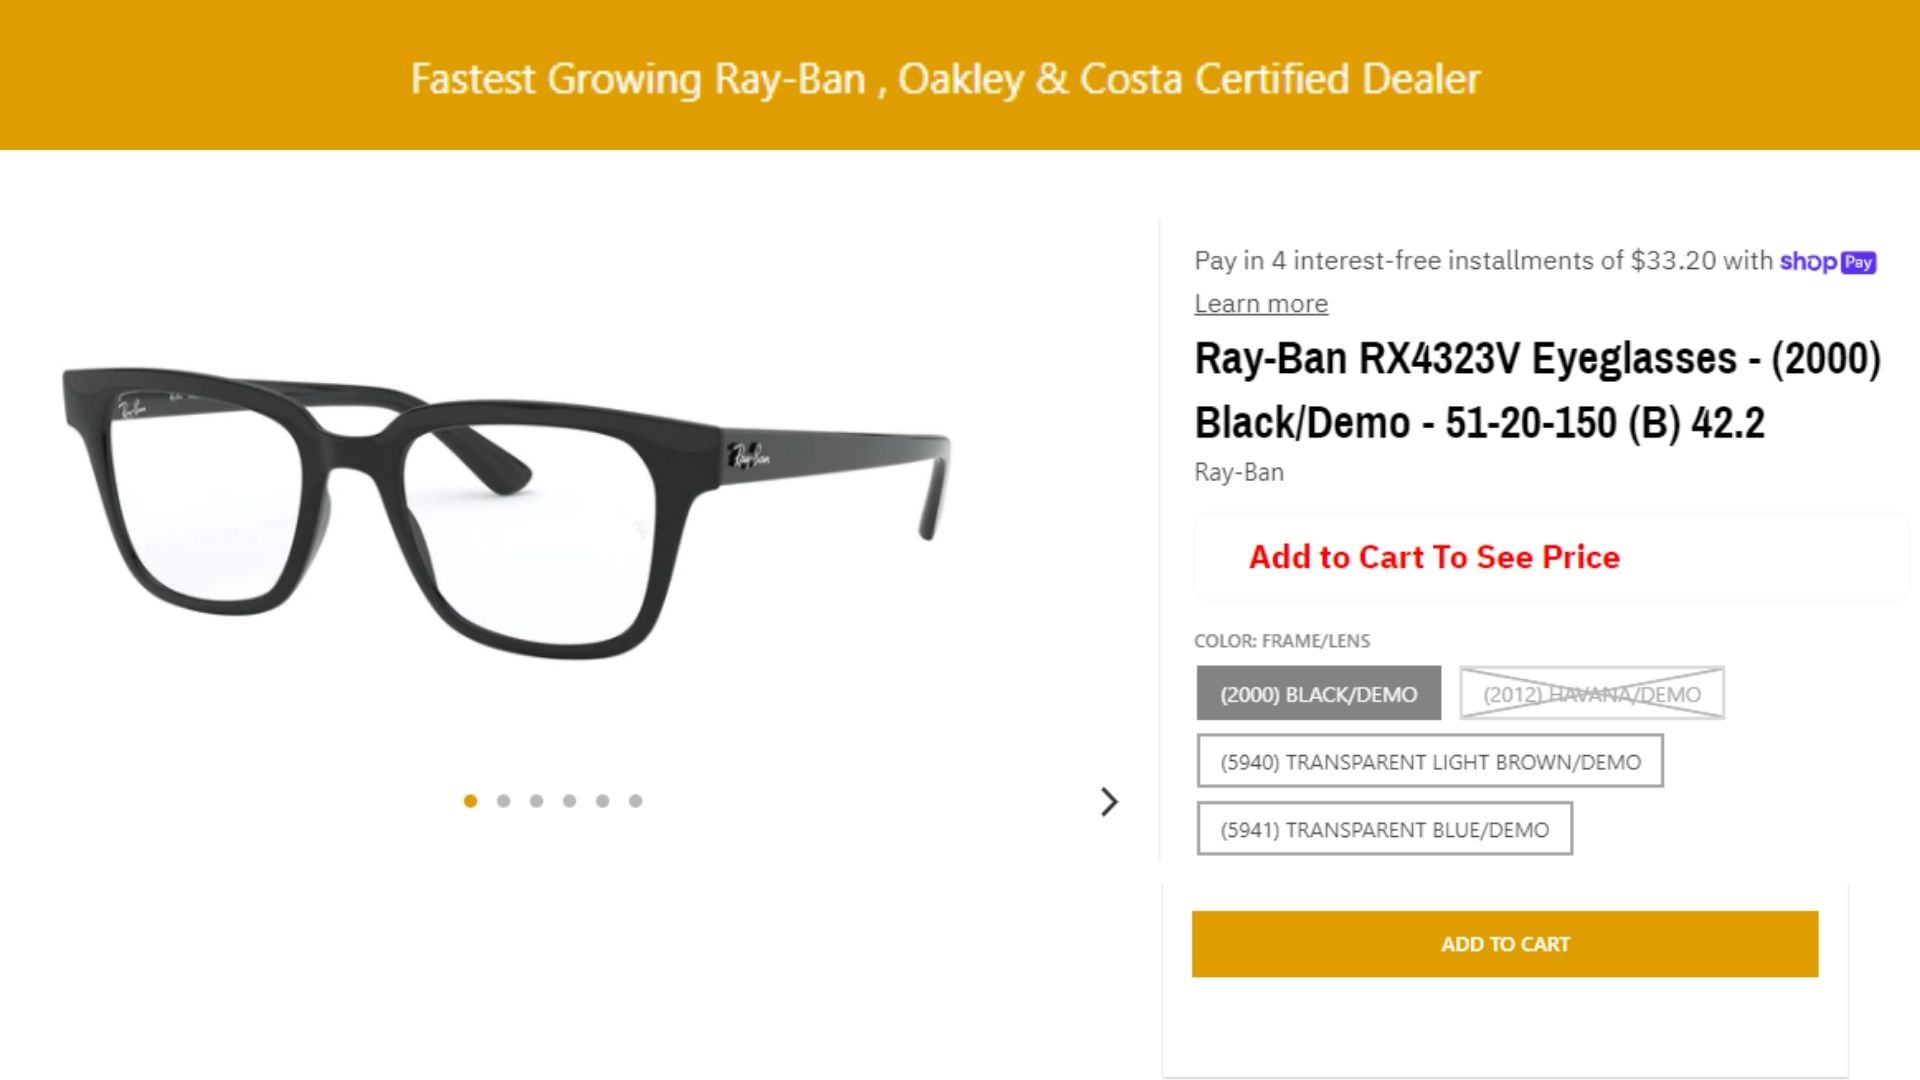 Do Ray Ban Eyeglasses Have Anti-Reflective coating?